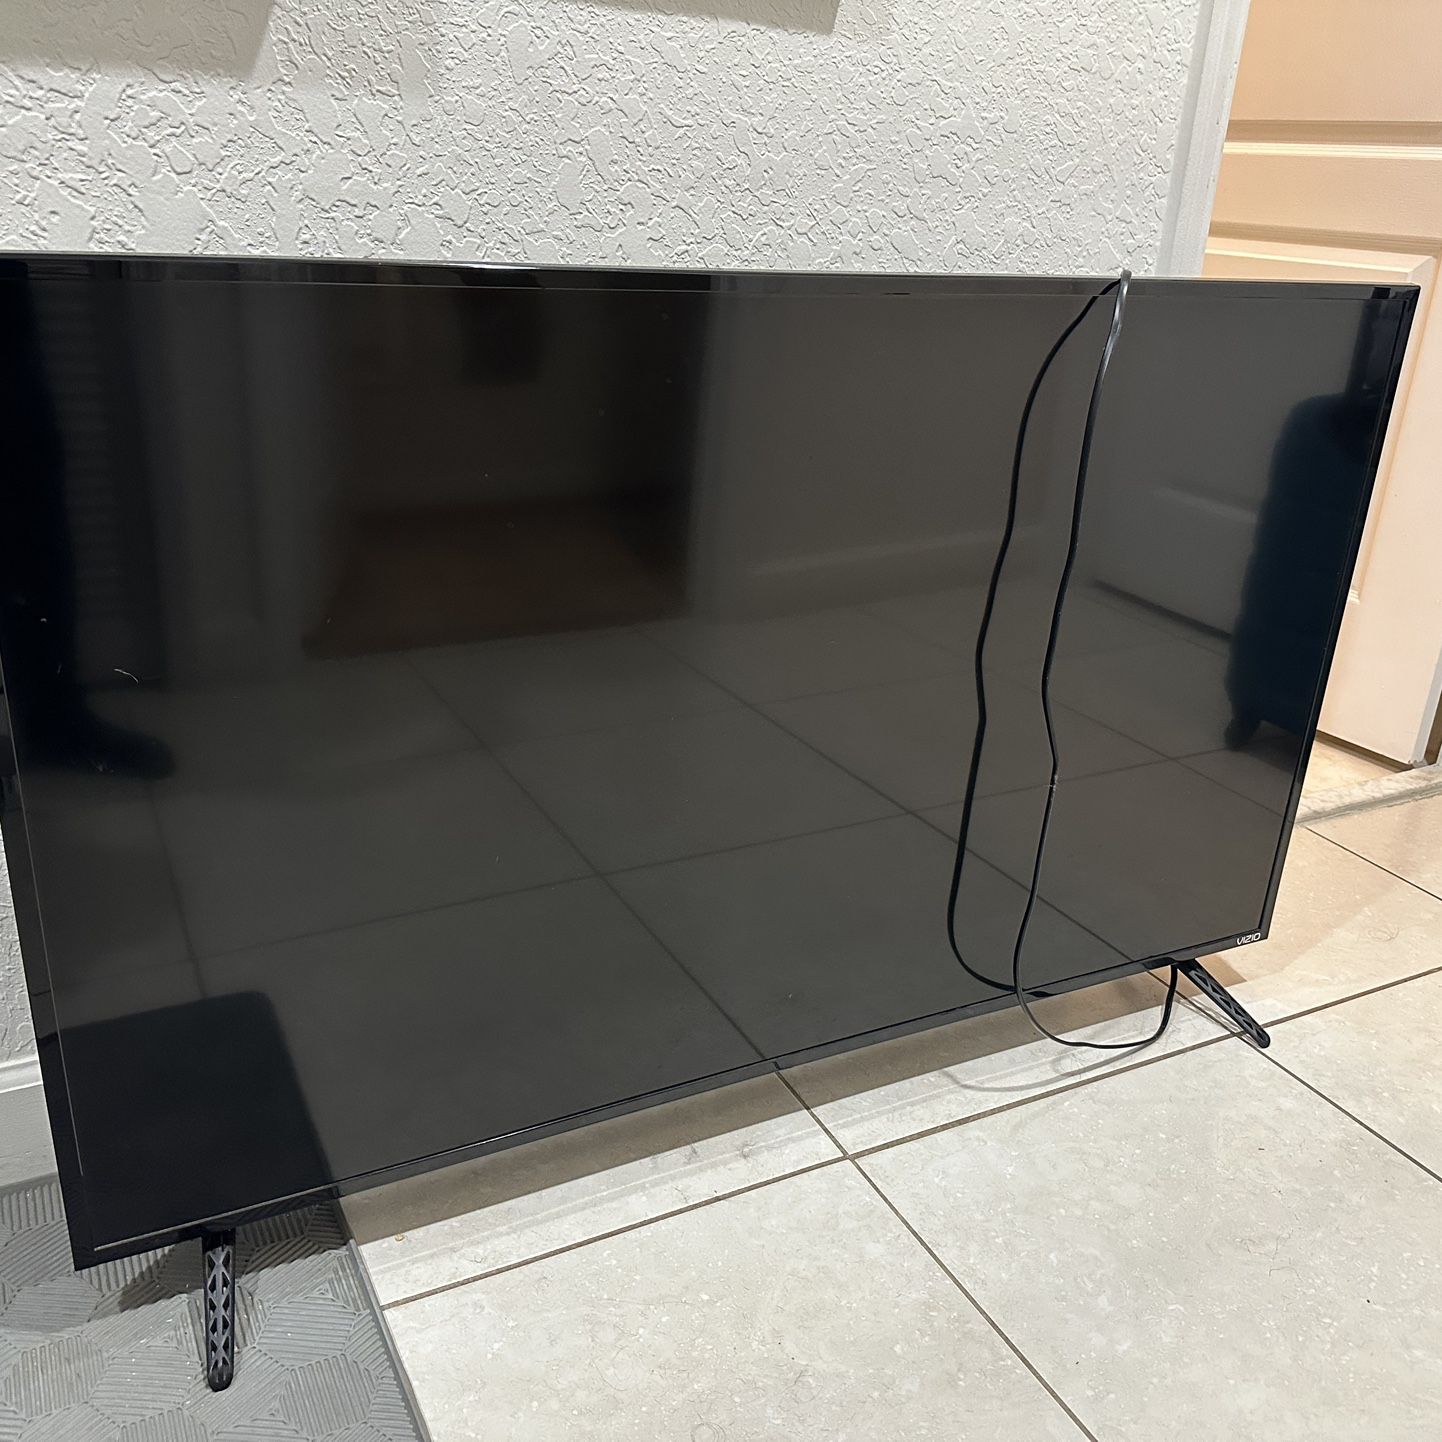 Vizio 50” Smart LED TV